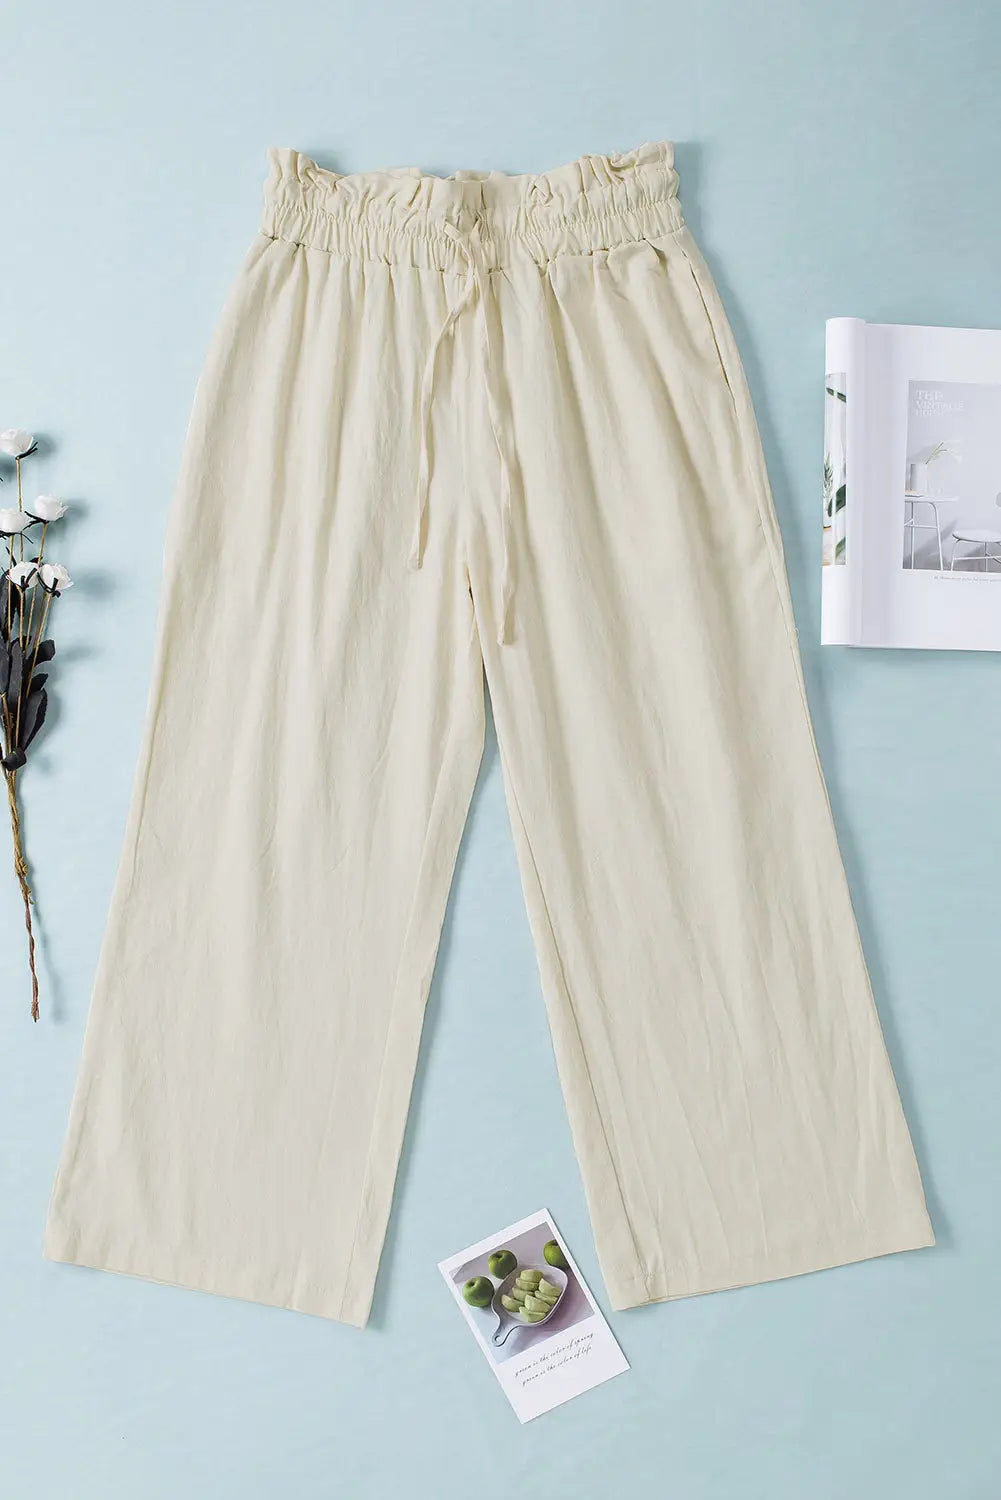 Khaki paperbag waist straight leg cropped pants - wide